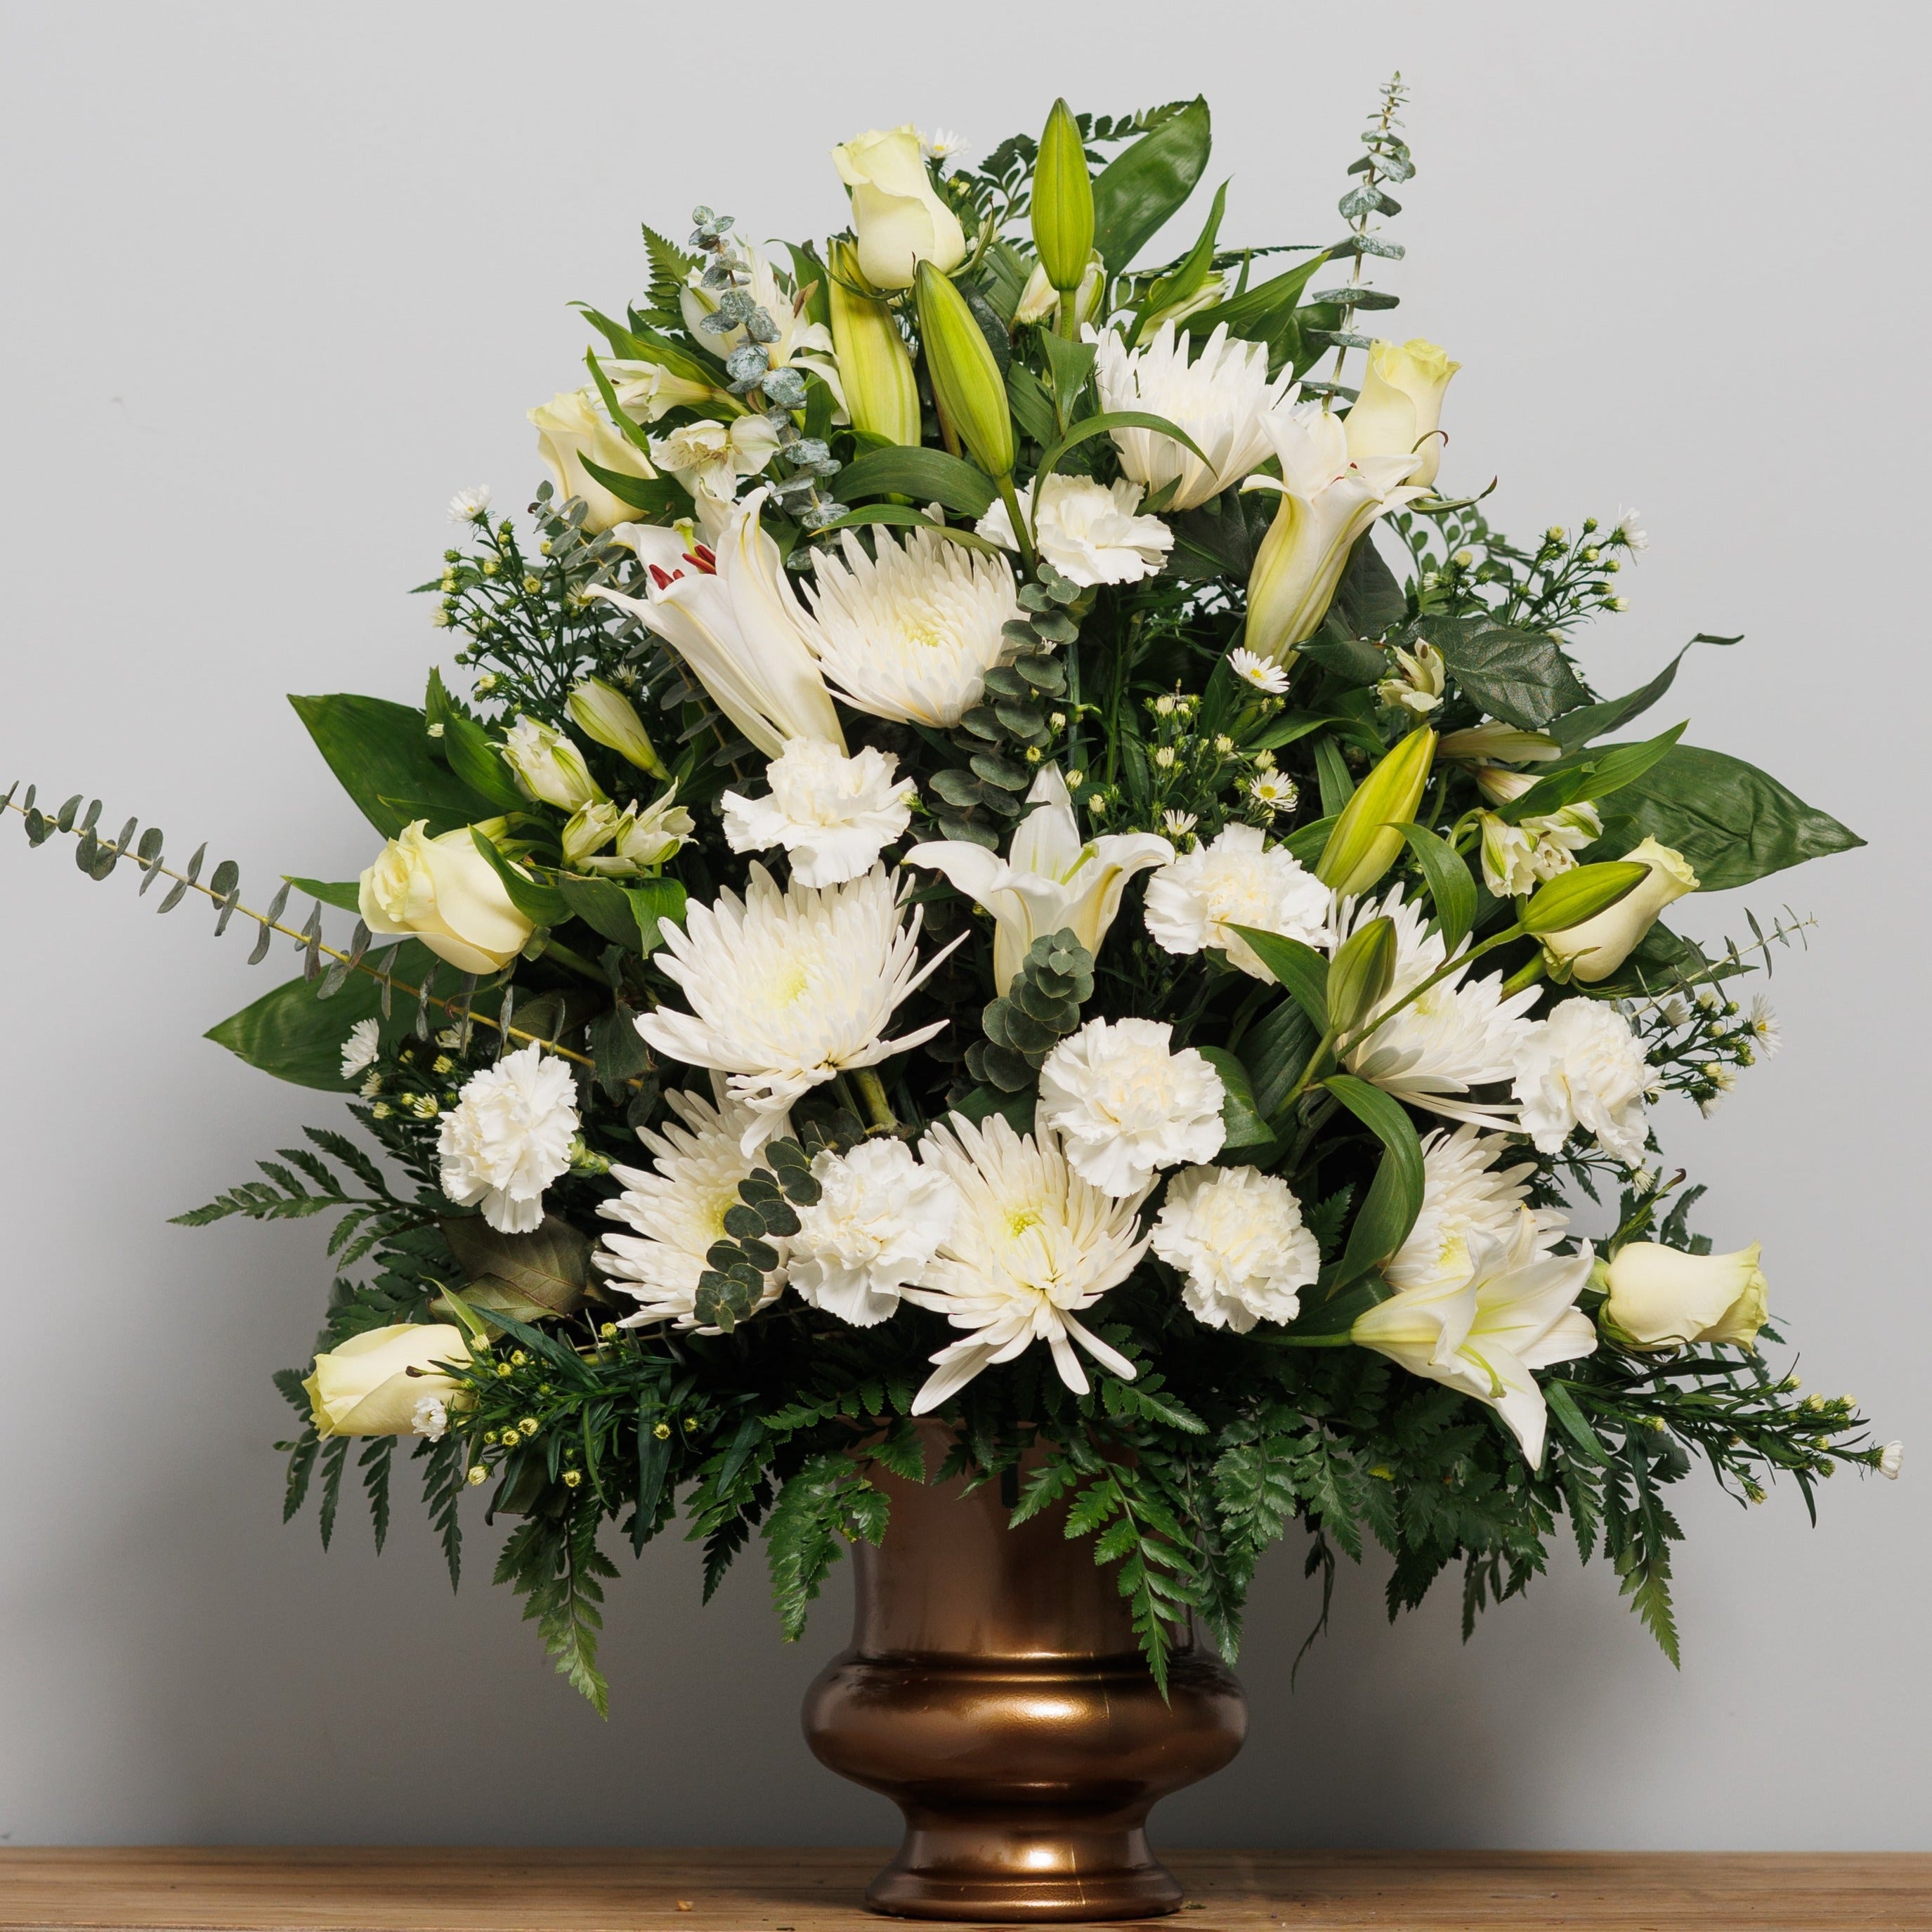 An all white floral arrangement in a bronze urn.